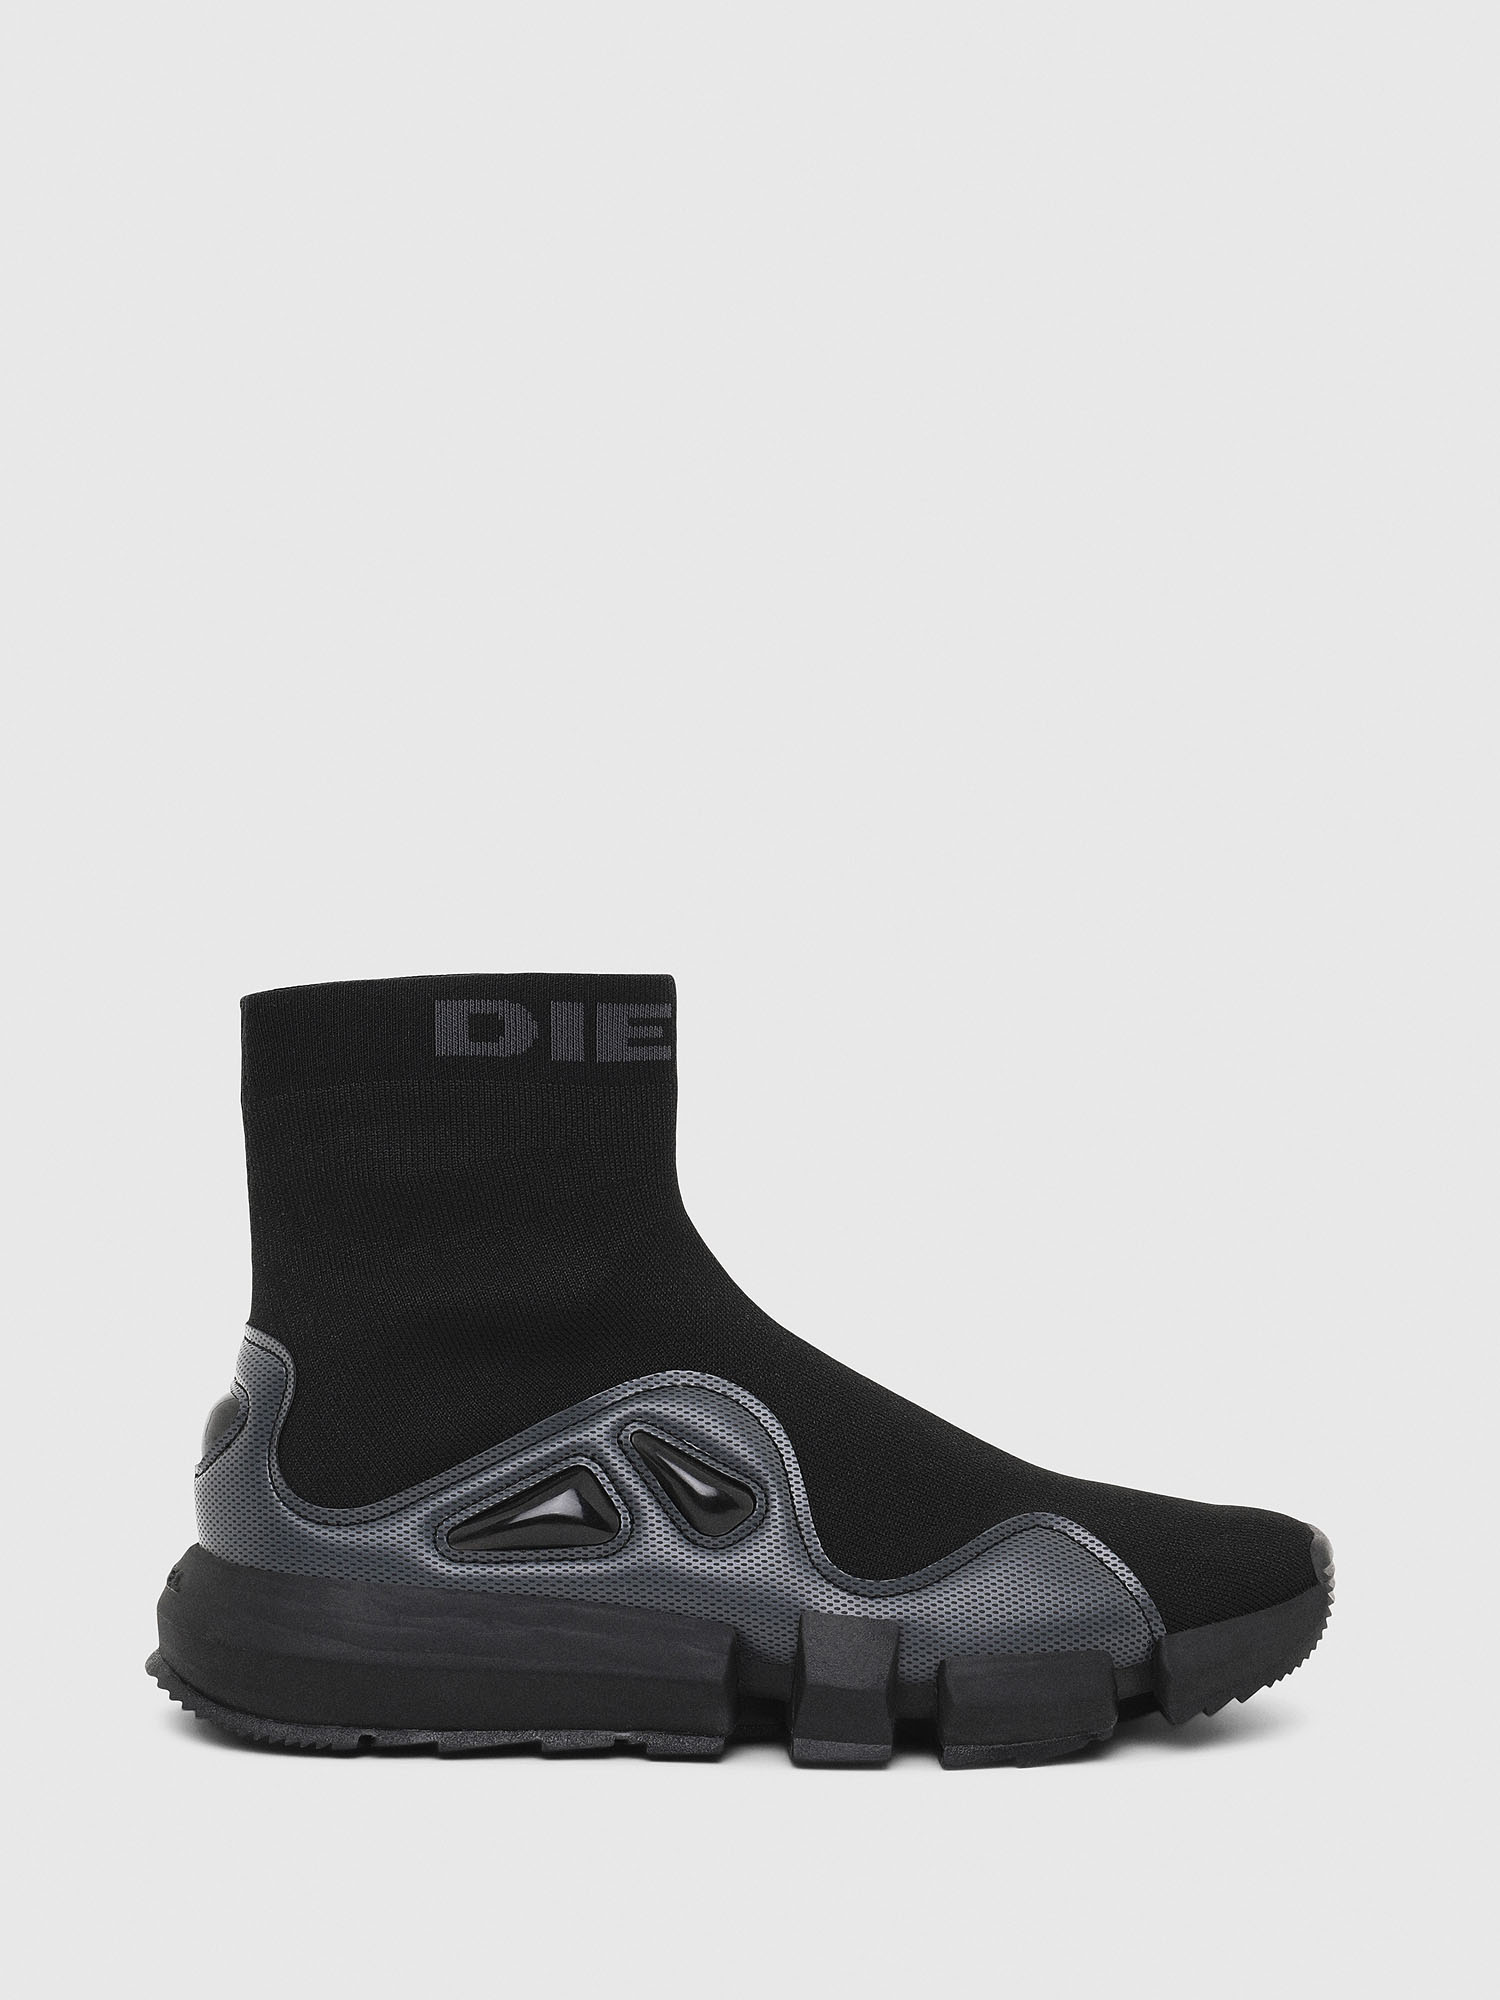 Diesel Sock Sneakers With Bubble Detail In Black | ModeSens